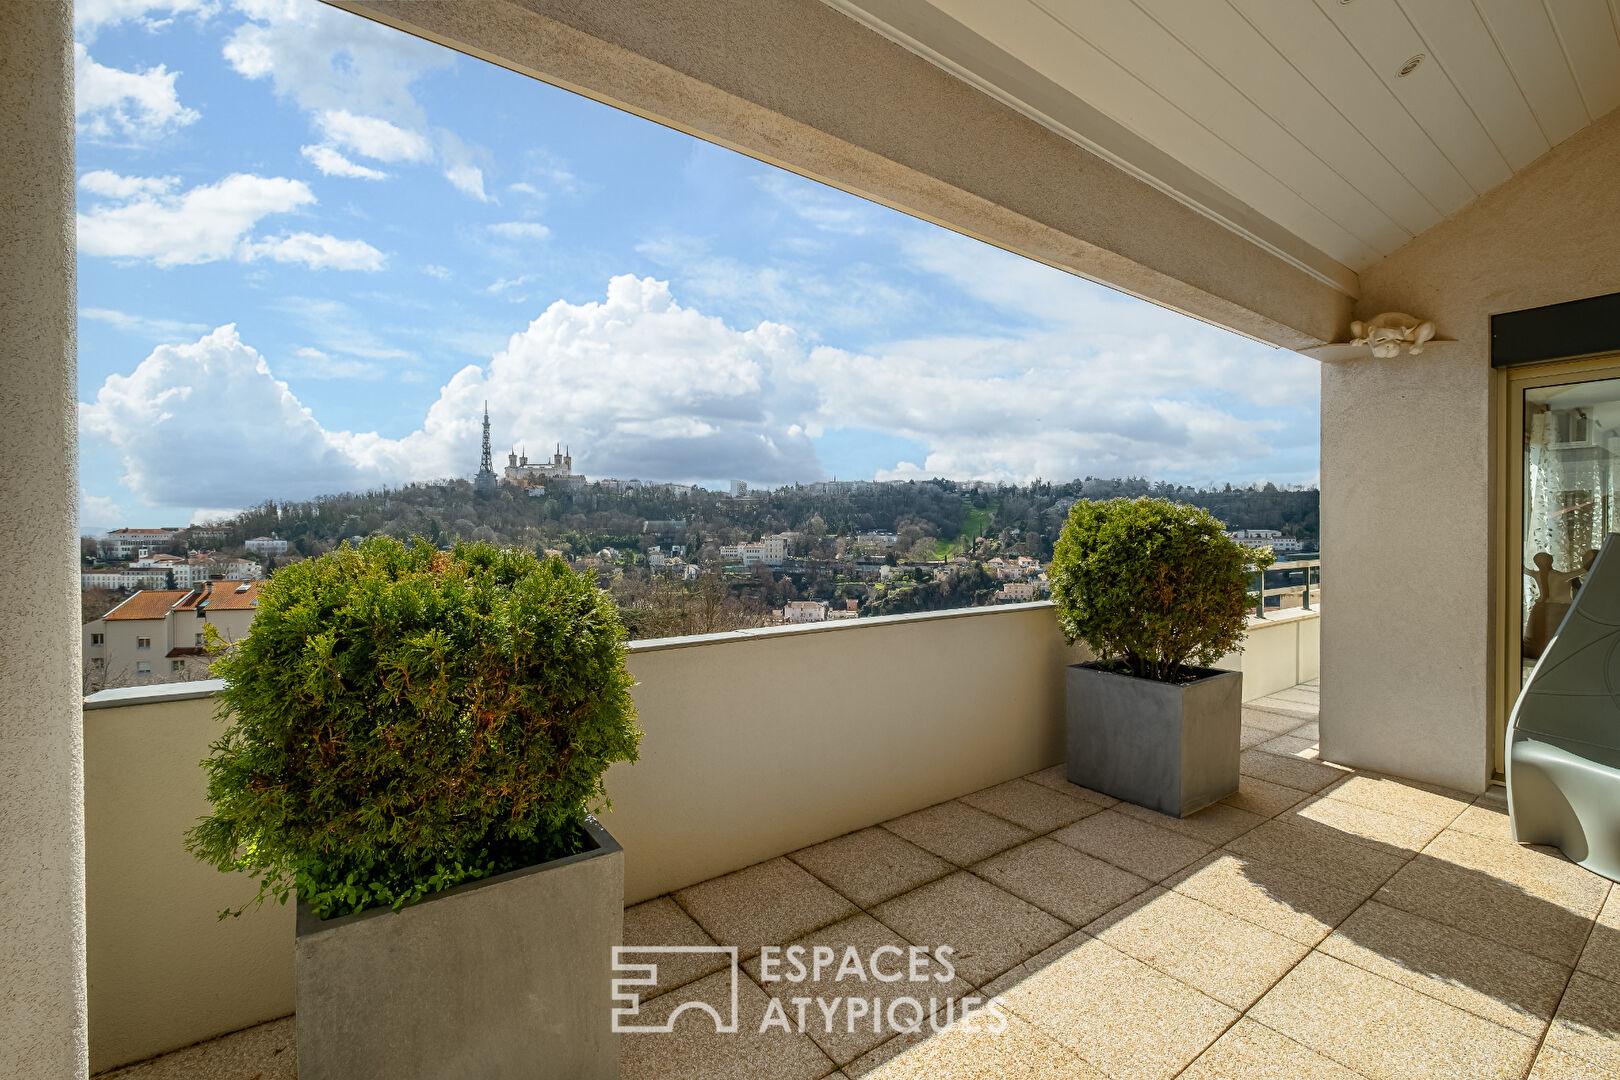 Top floor terraces with breathtaking views of Fourvière